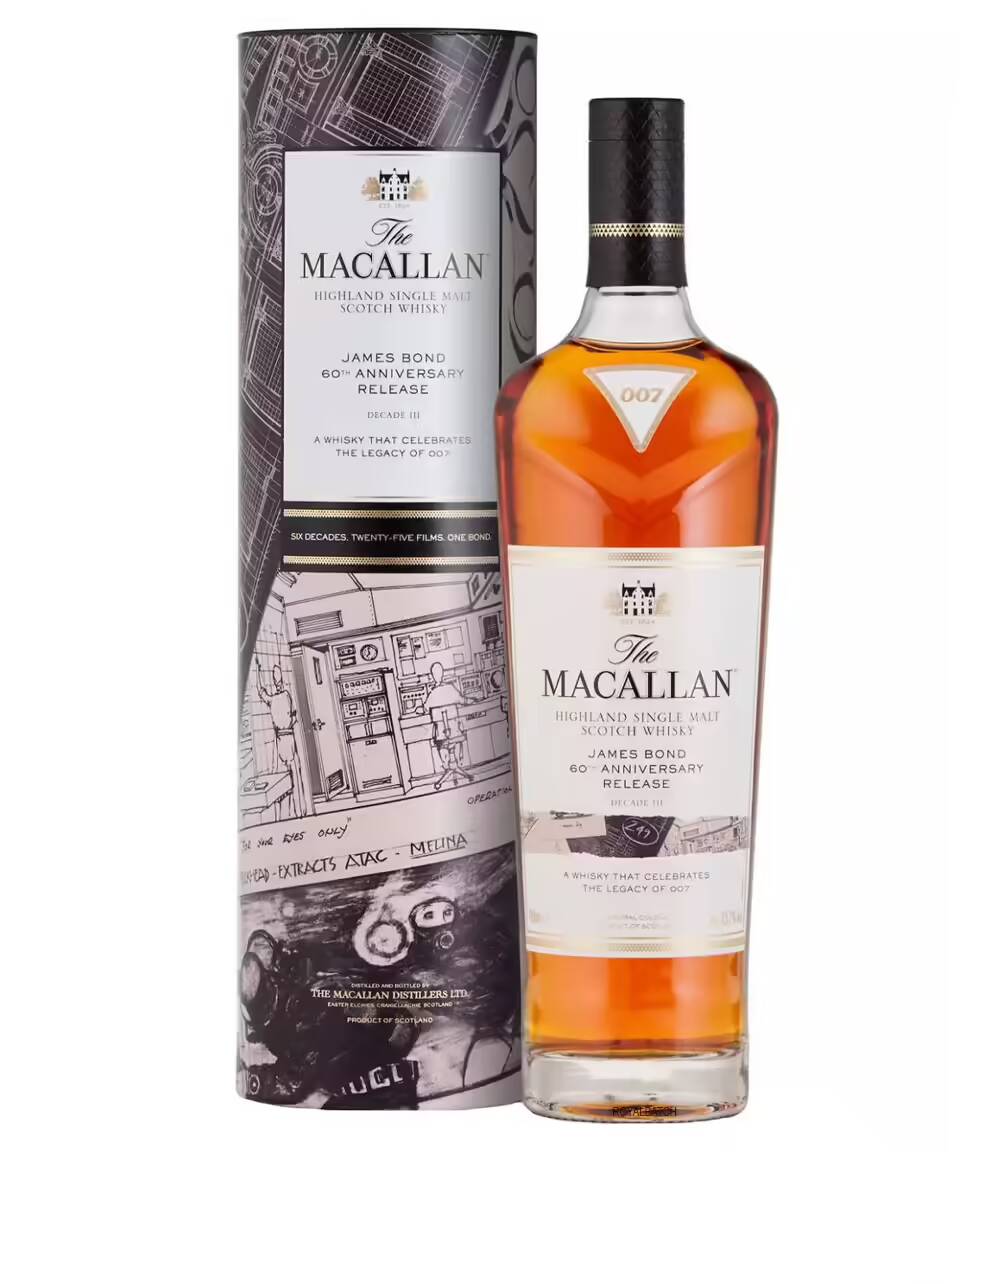 The Macallan James Bond 60th Anniversary Release Decade III Scotch Whisky